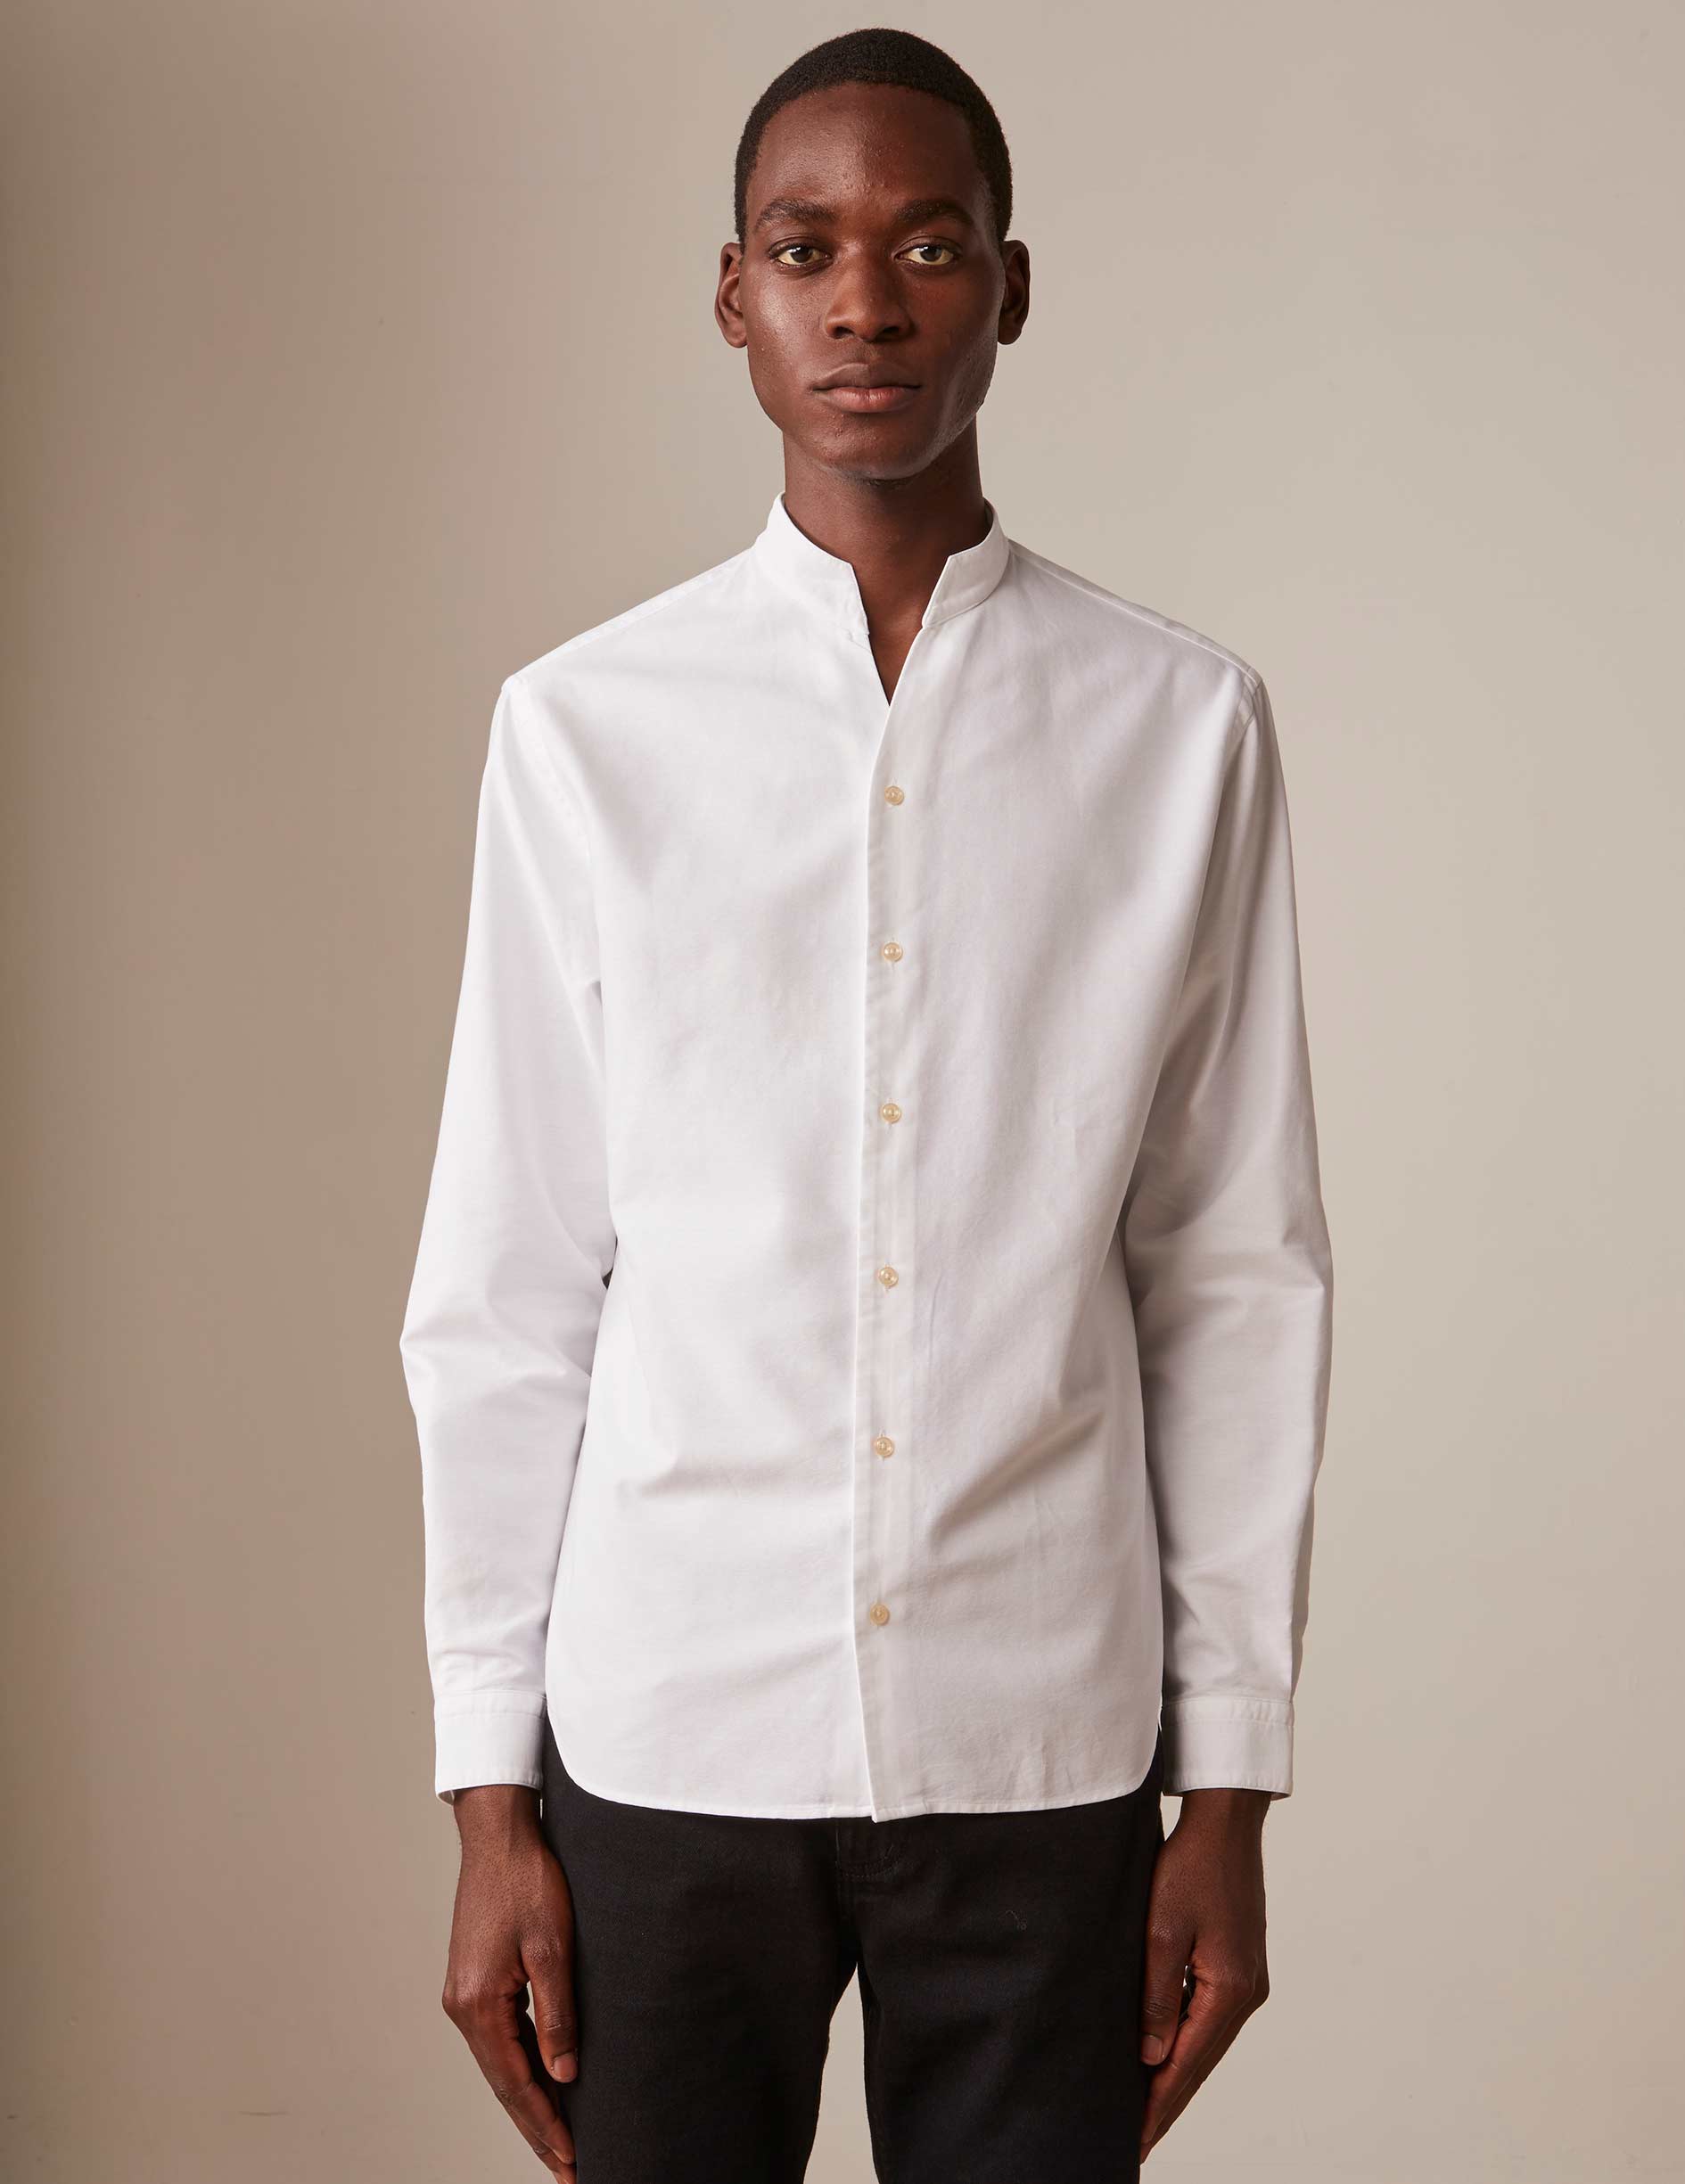 White Carl shirt - Oxford - Open straight Collar